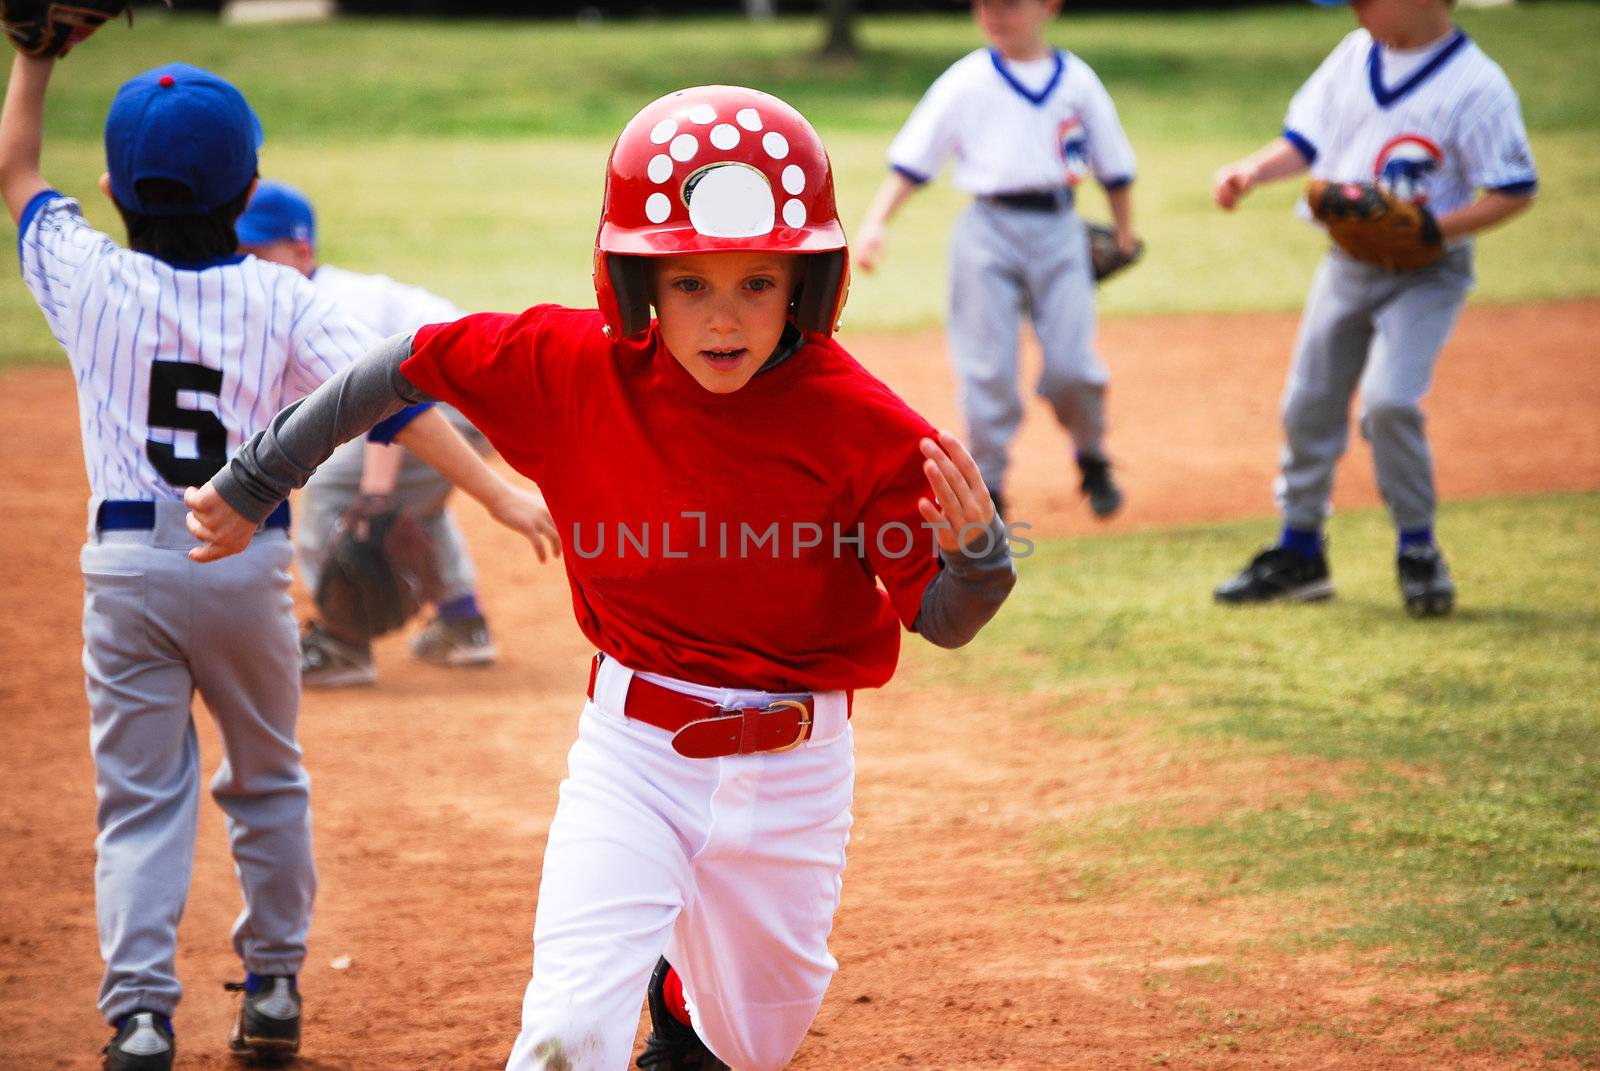 Youth little league baseball boy running bases.